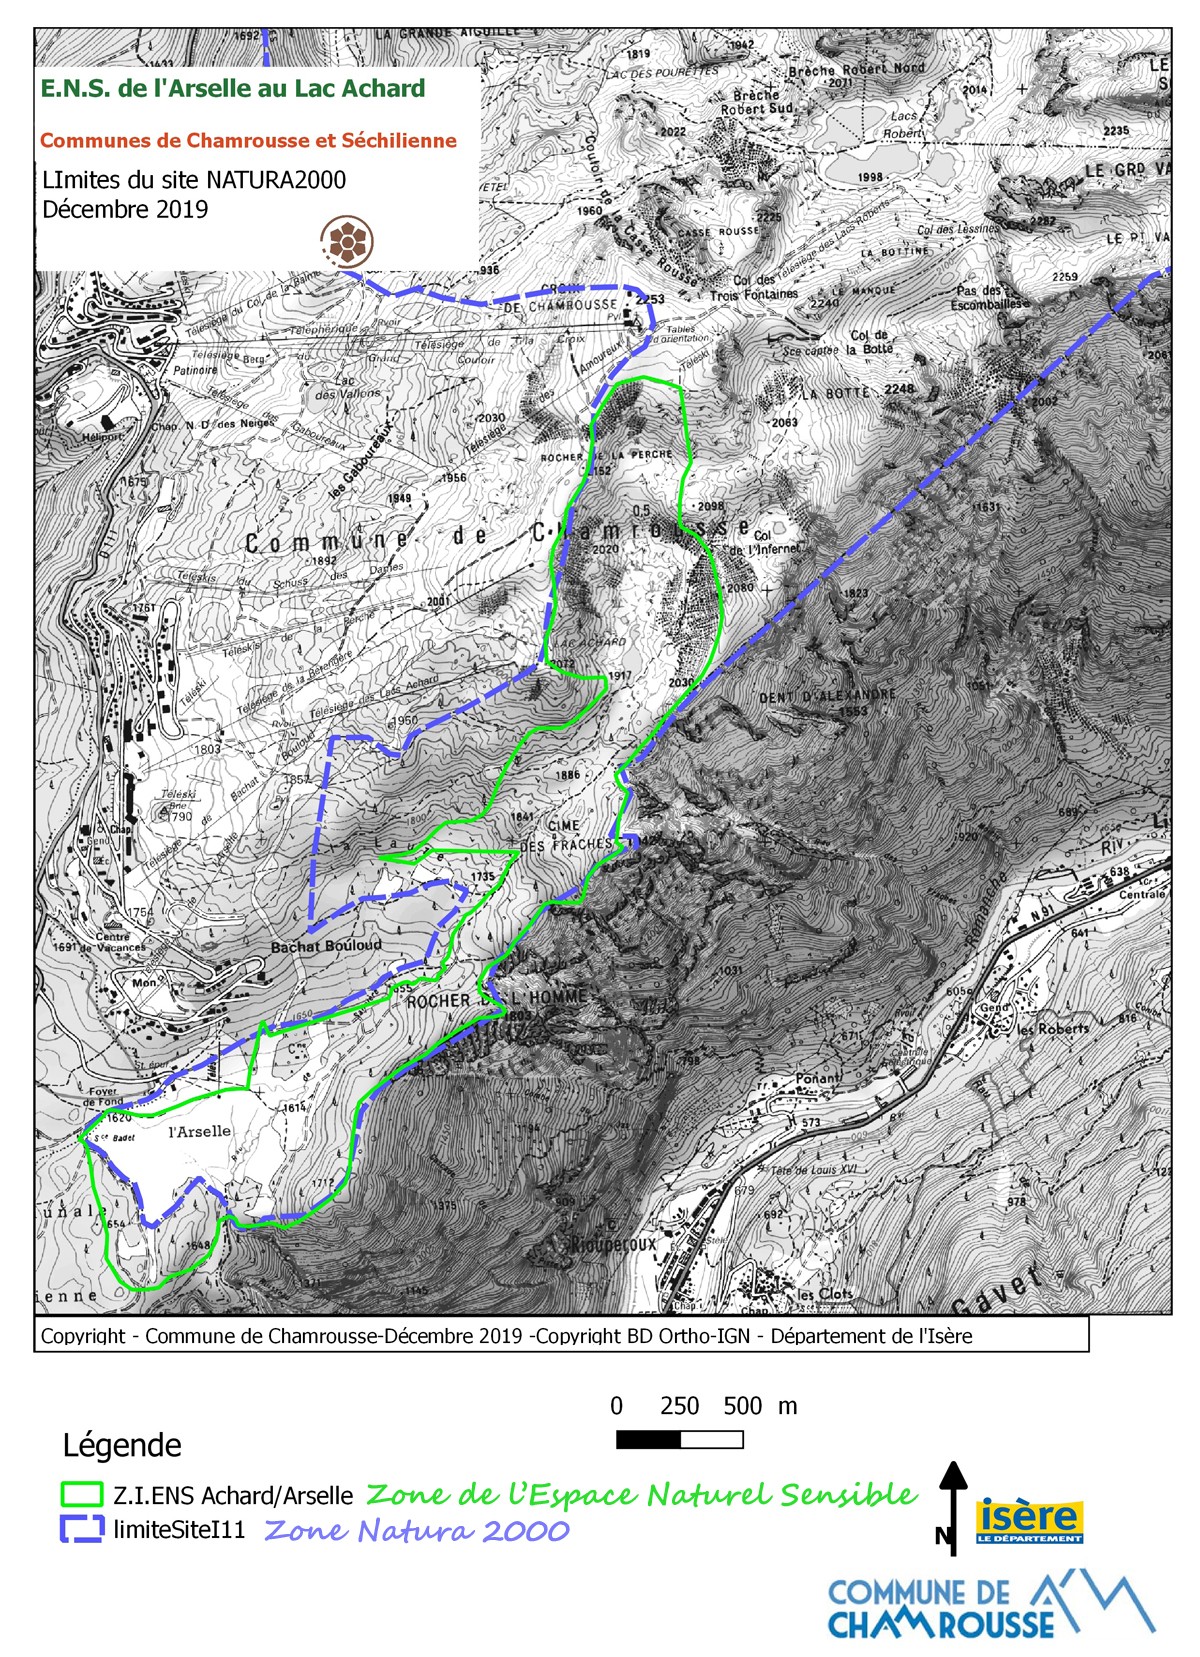 Chamrousse carte zone natura 2000 espace naturel sensible plateau arselle lac achard station montagne ete isere alpes france